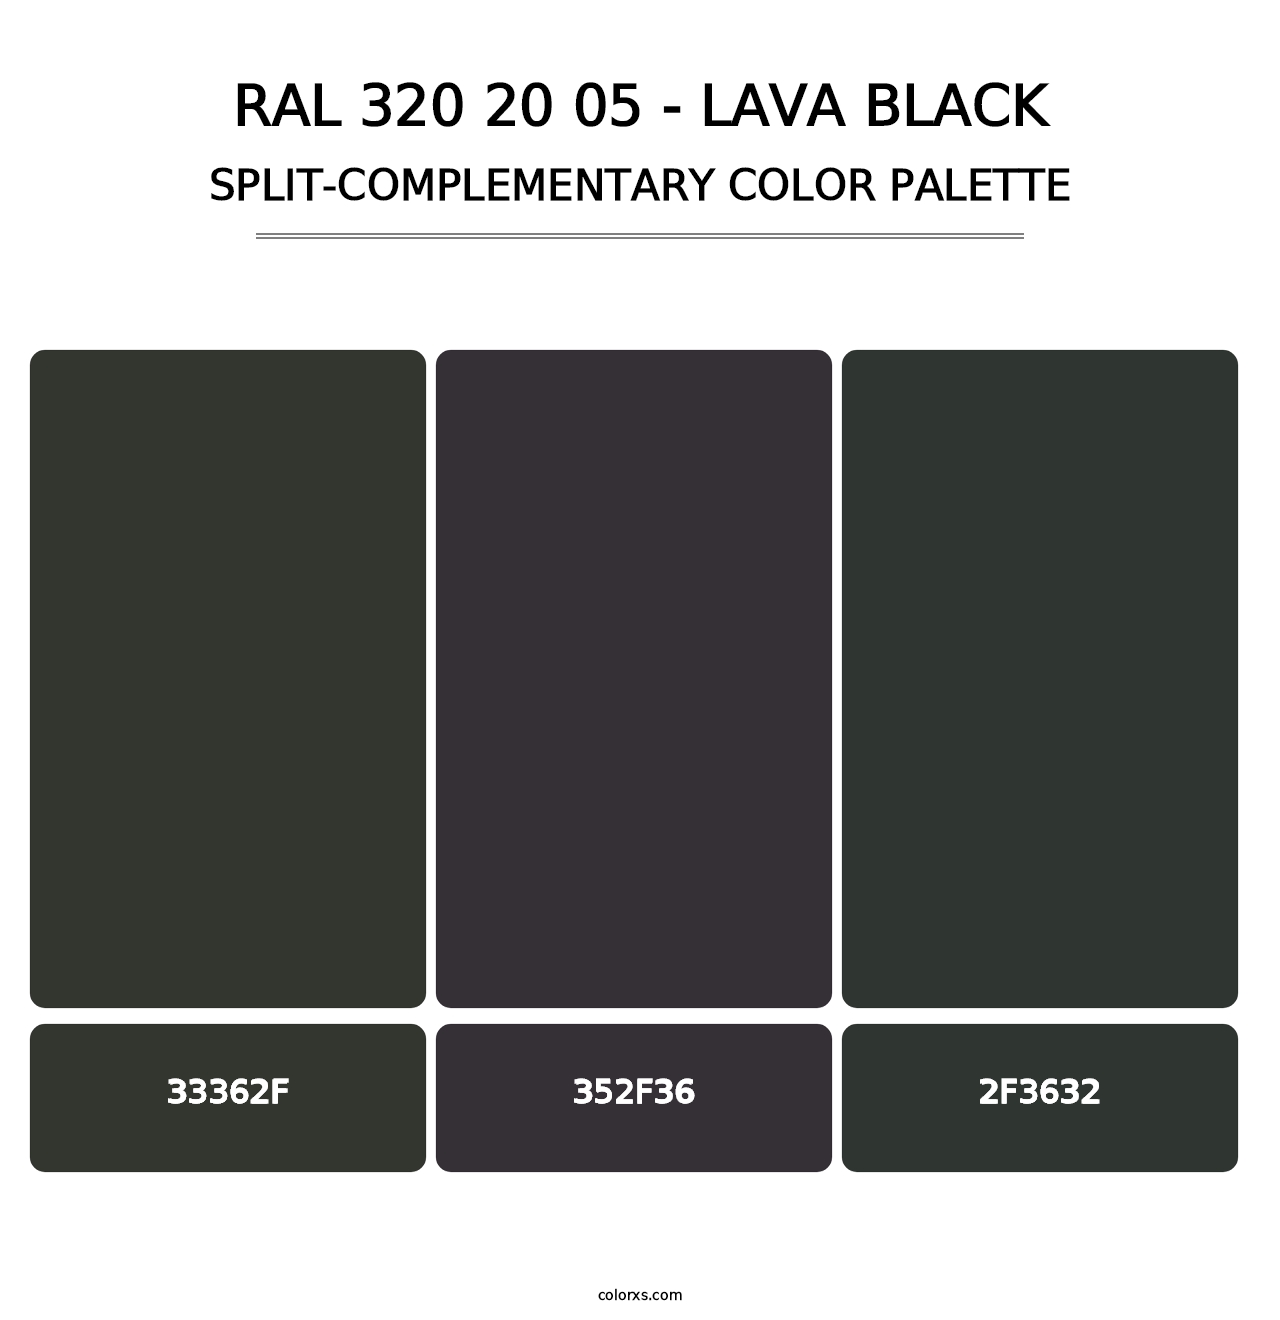 RAL 320 20 05 - Lava Black - Split-Complementary Color Palette